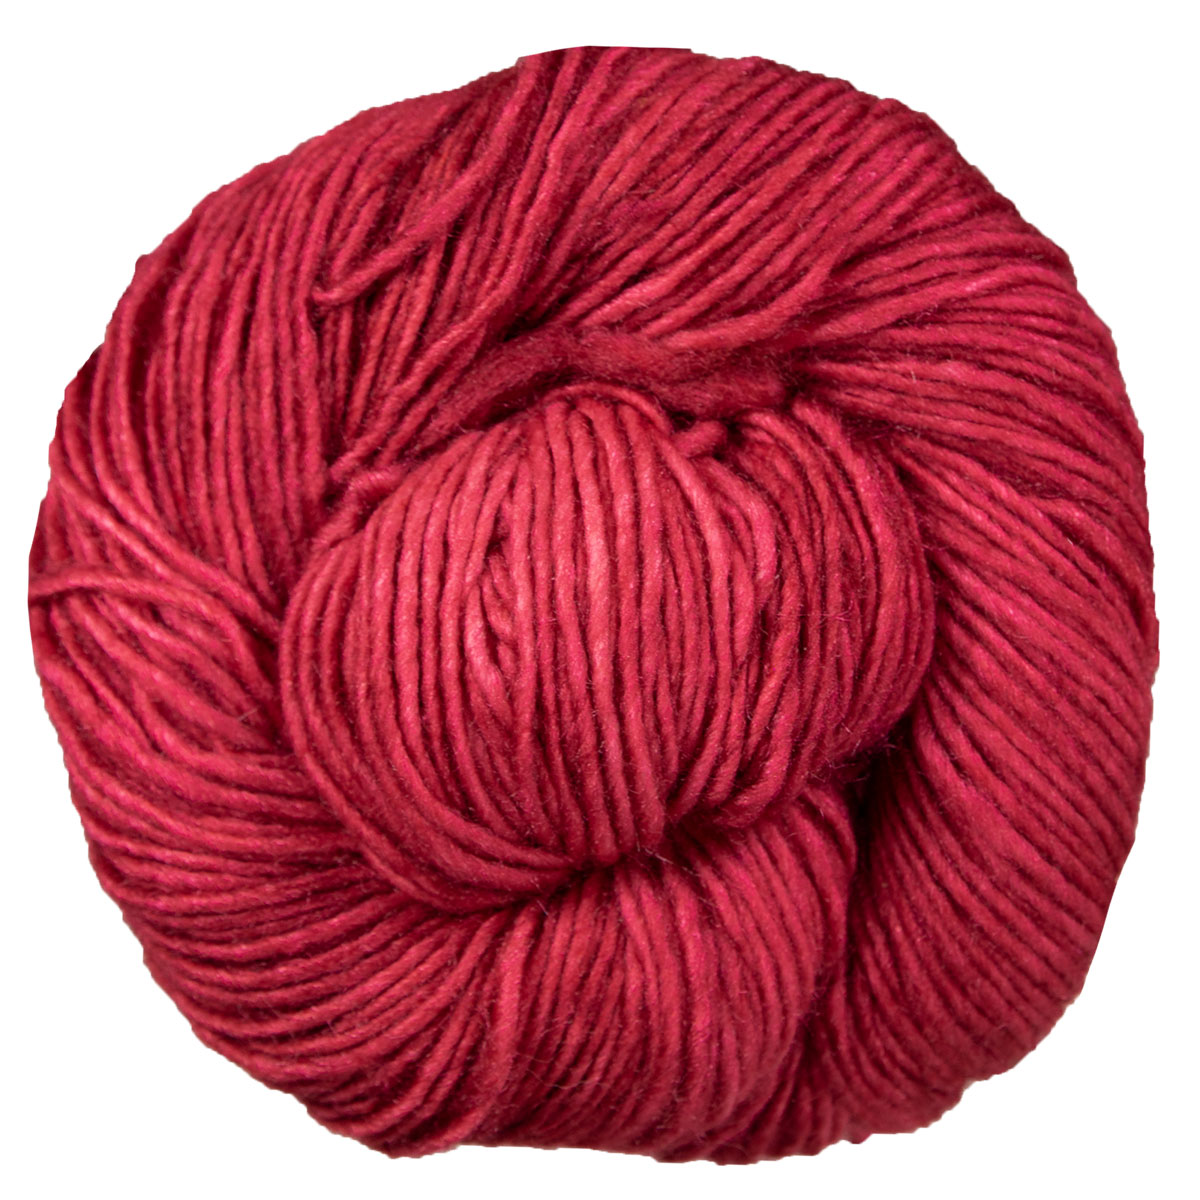 870 Malabrigo Silky Merino DK Knitting  Yarn Wool 50g Candombe